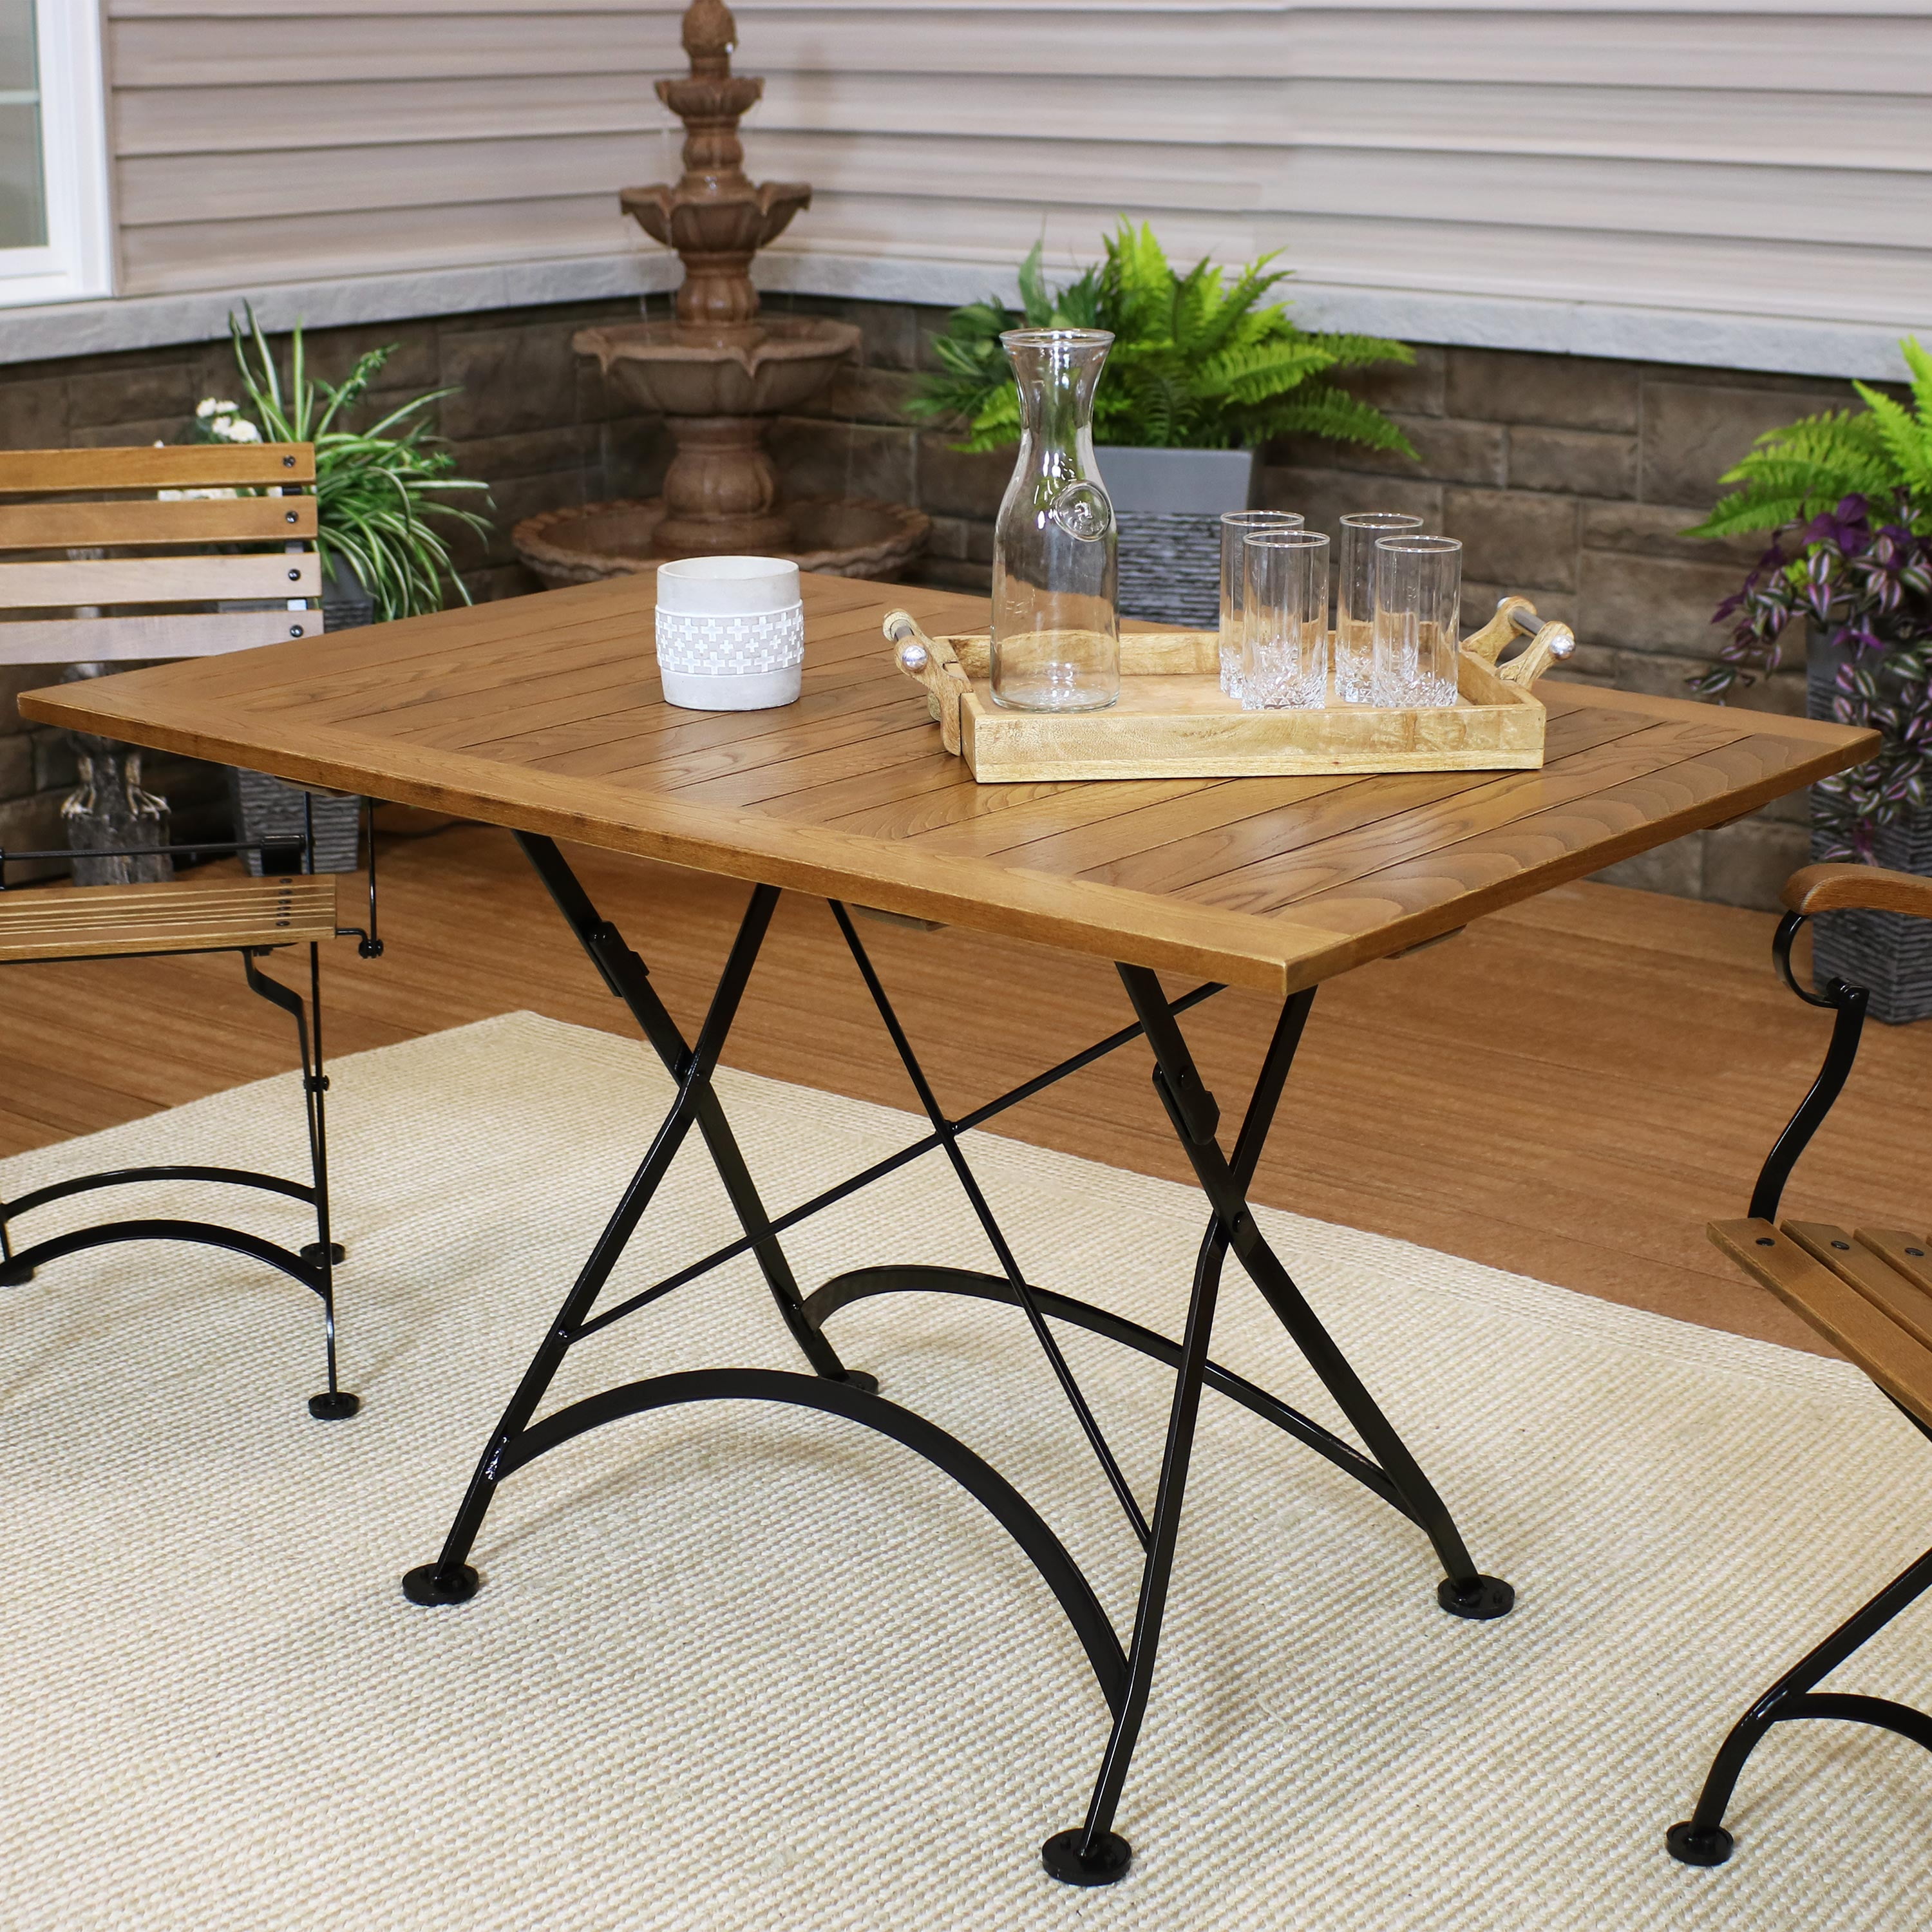 Sunnydaze European Chestnut Wood Folding Dining Table - 48 inches x 32